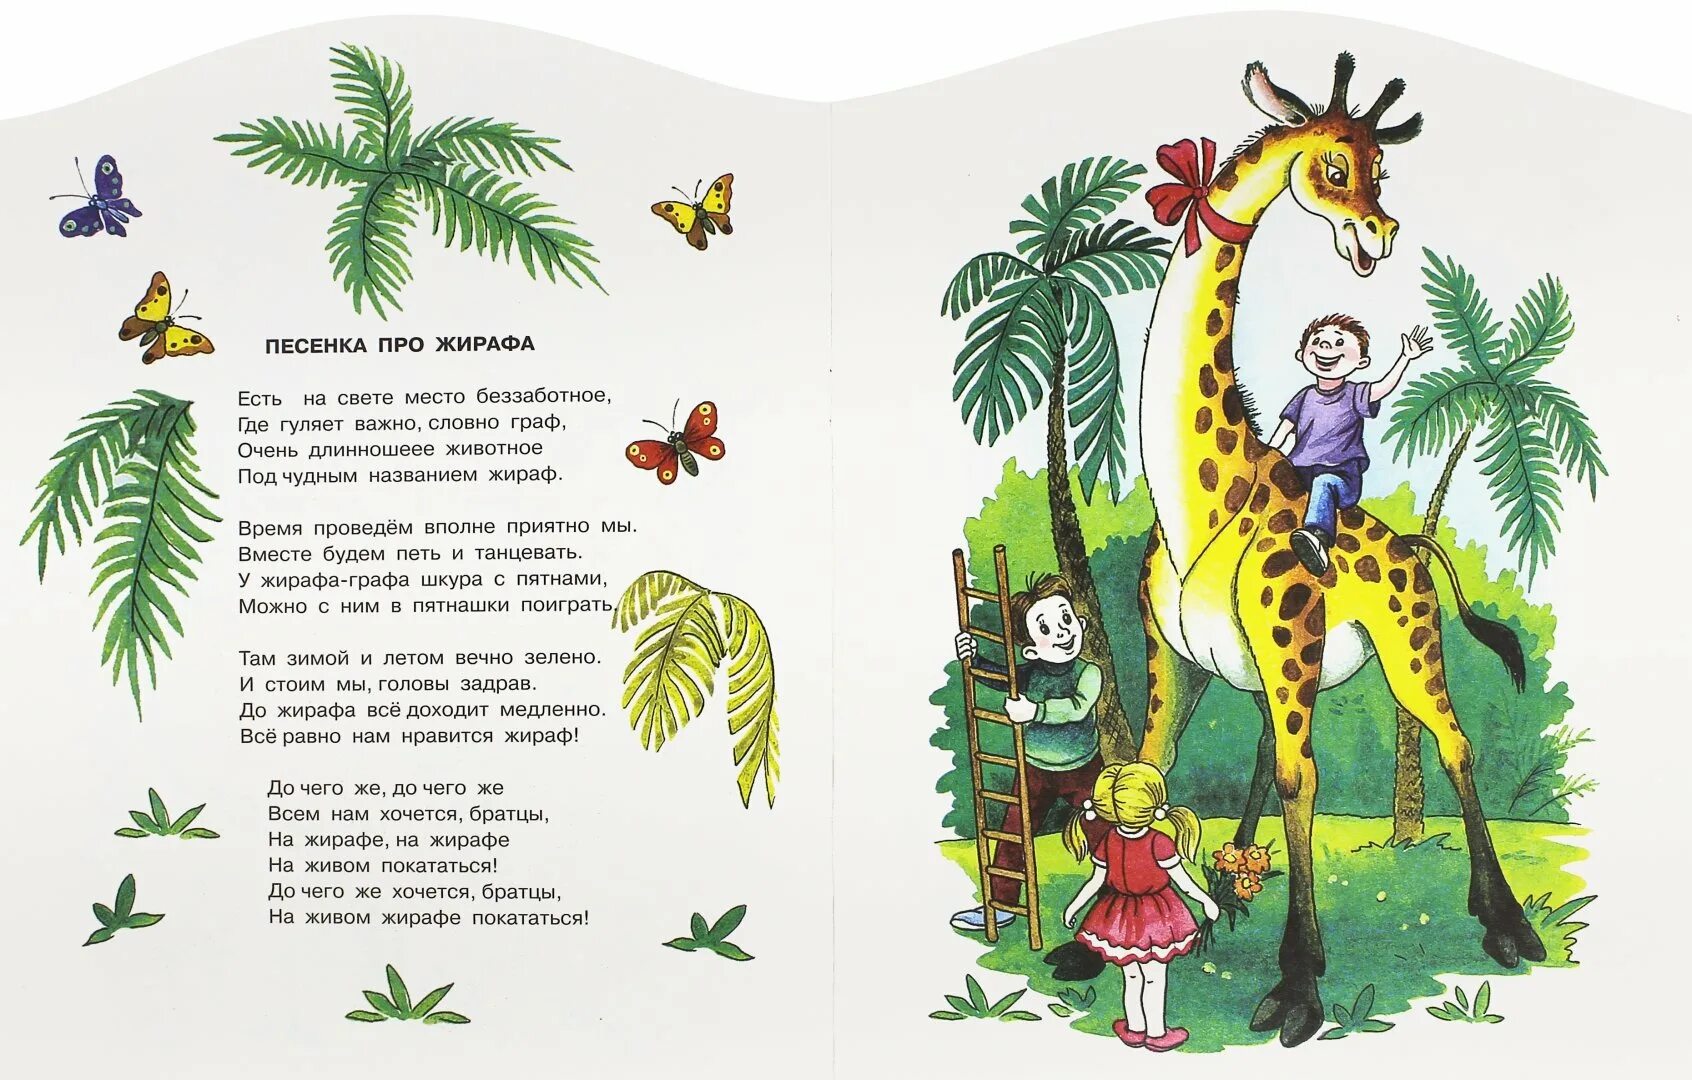 Детские стишки про животных. Стихотворение про жирафа. Детские стихи про жирафа. Песенка о жирафе. Песни про братца